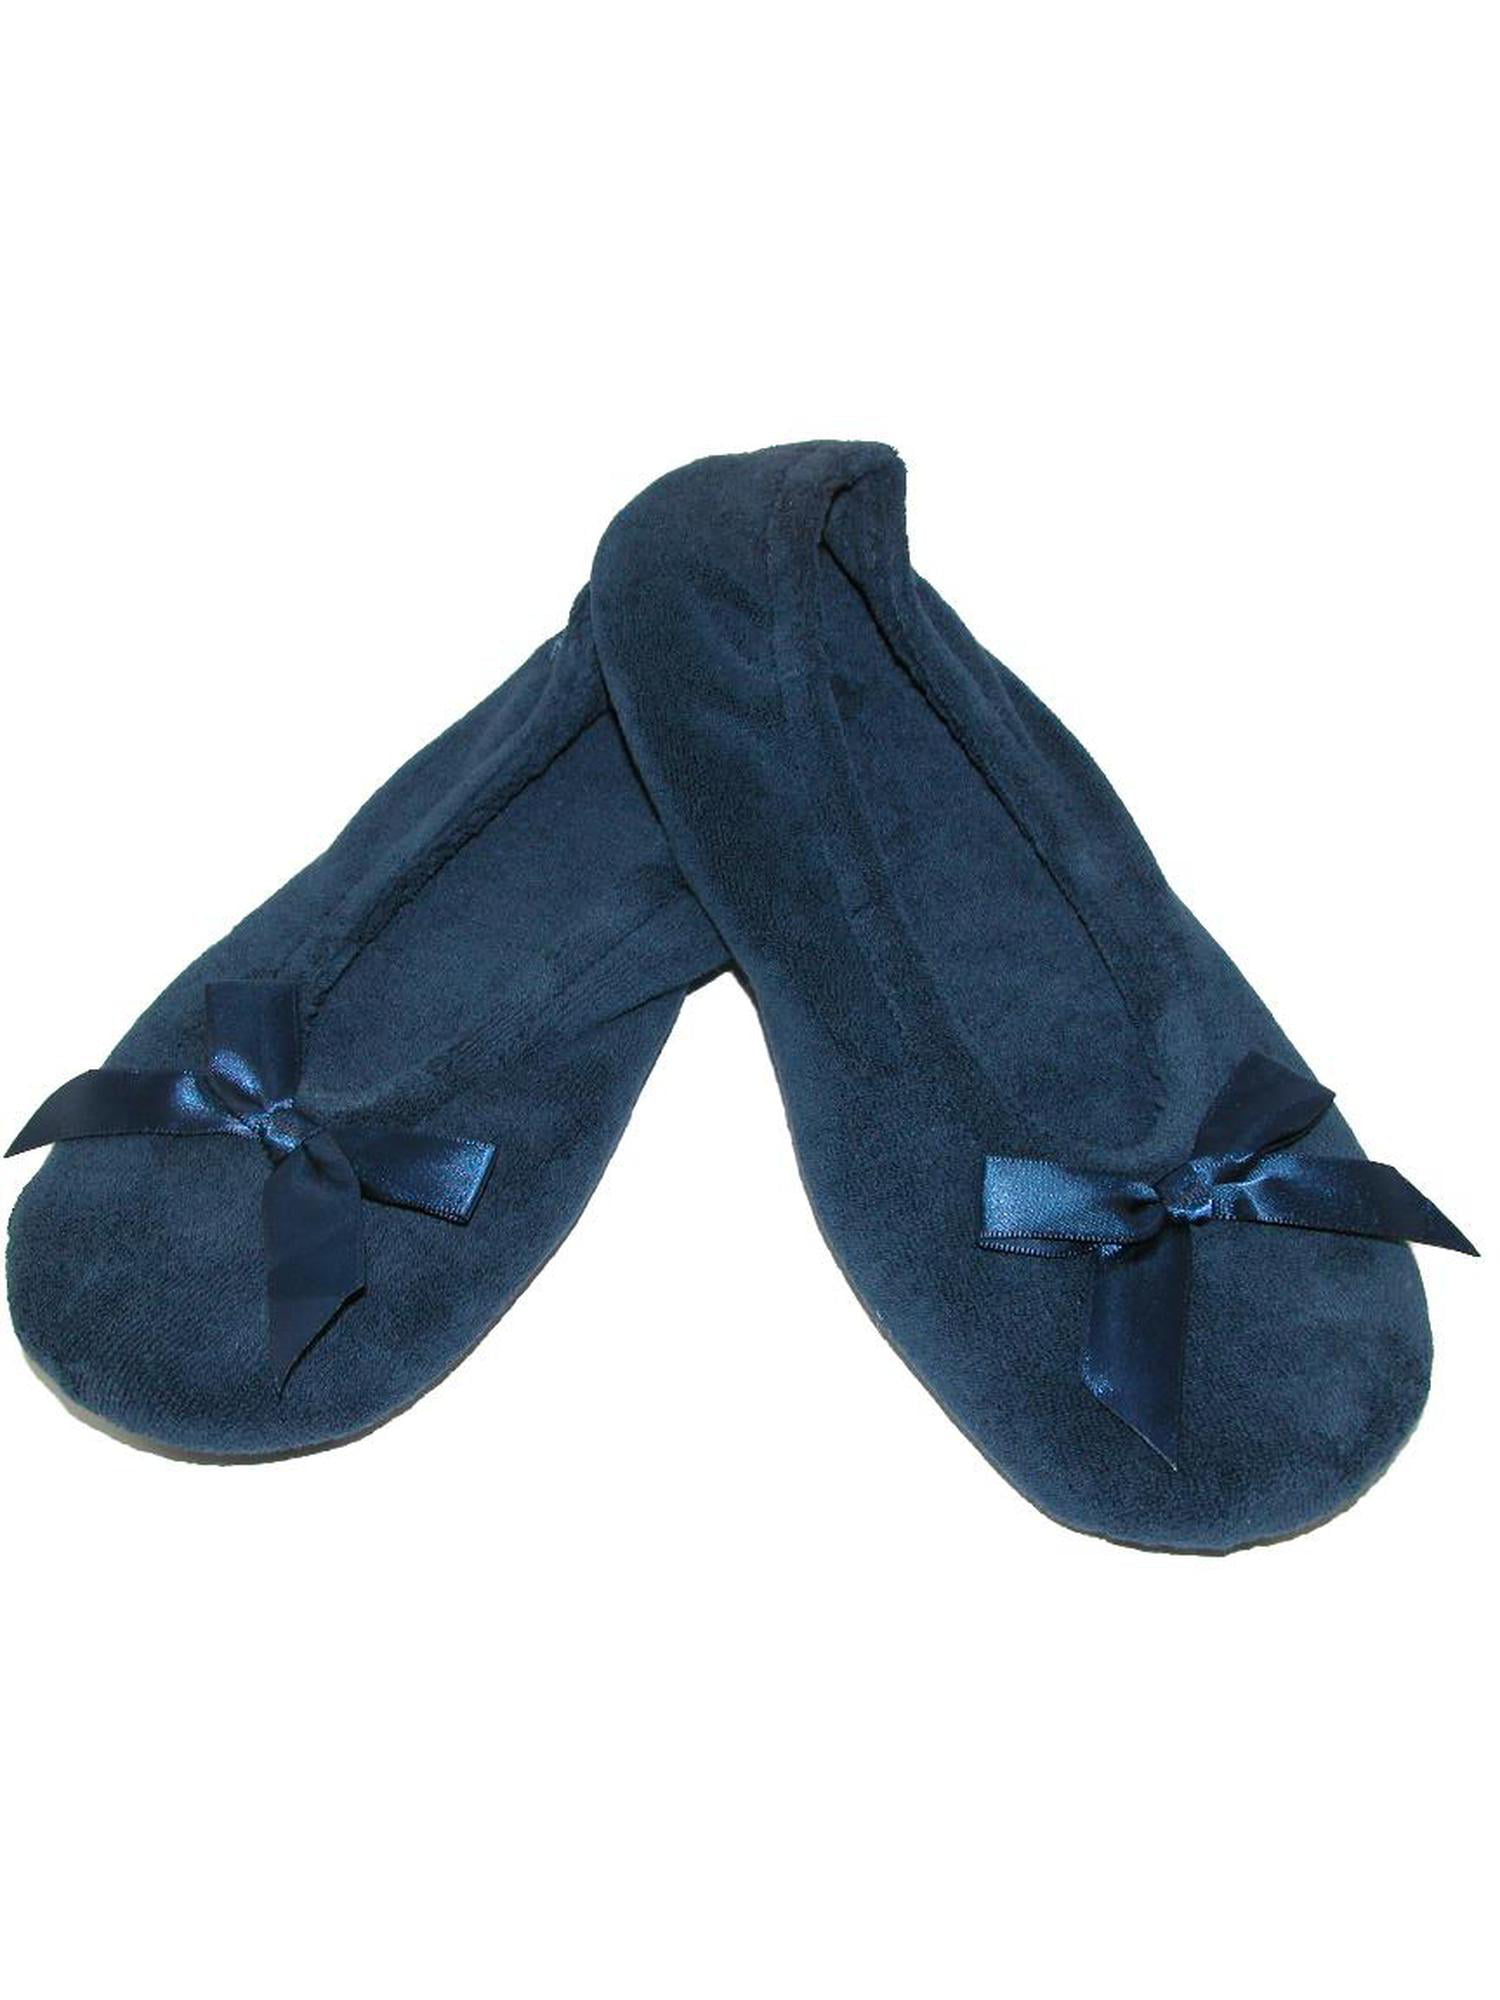 isotoner navy blue slippers